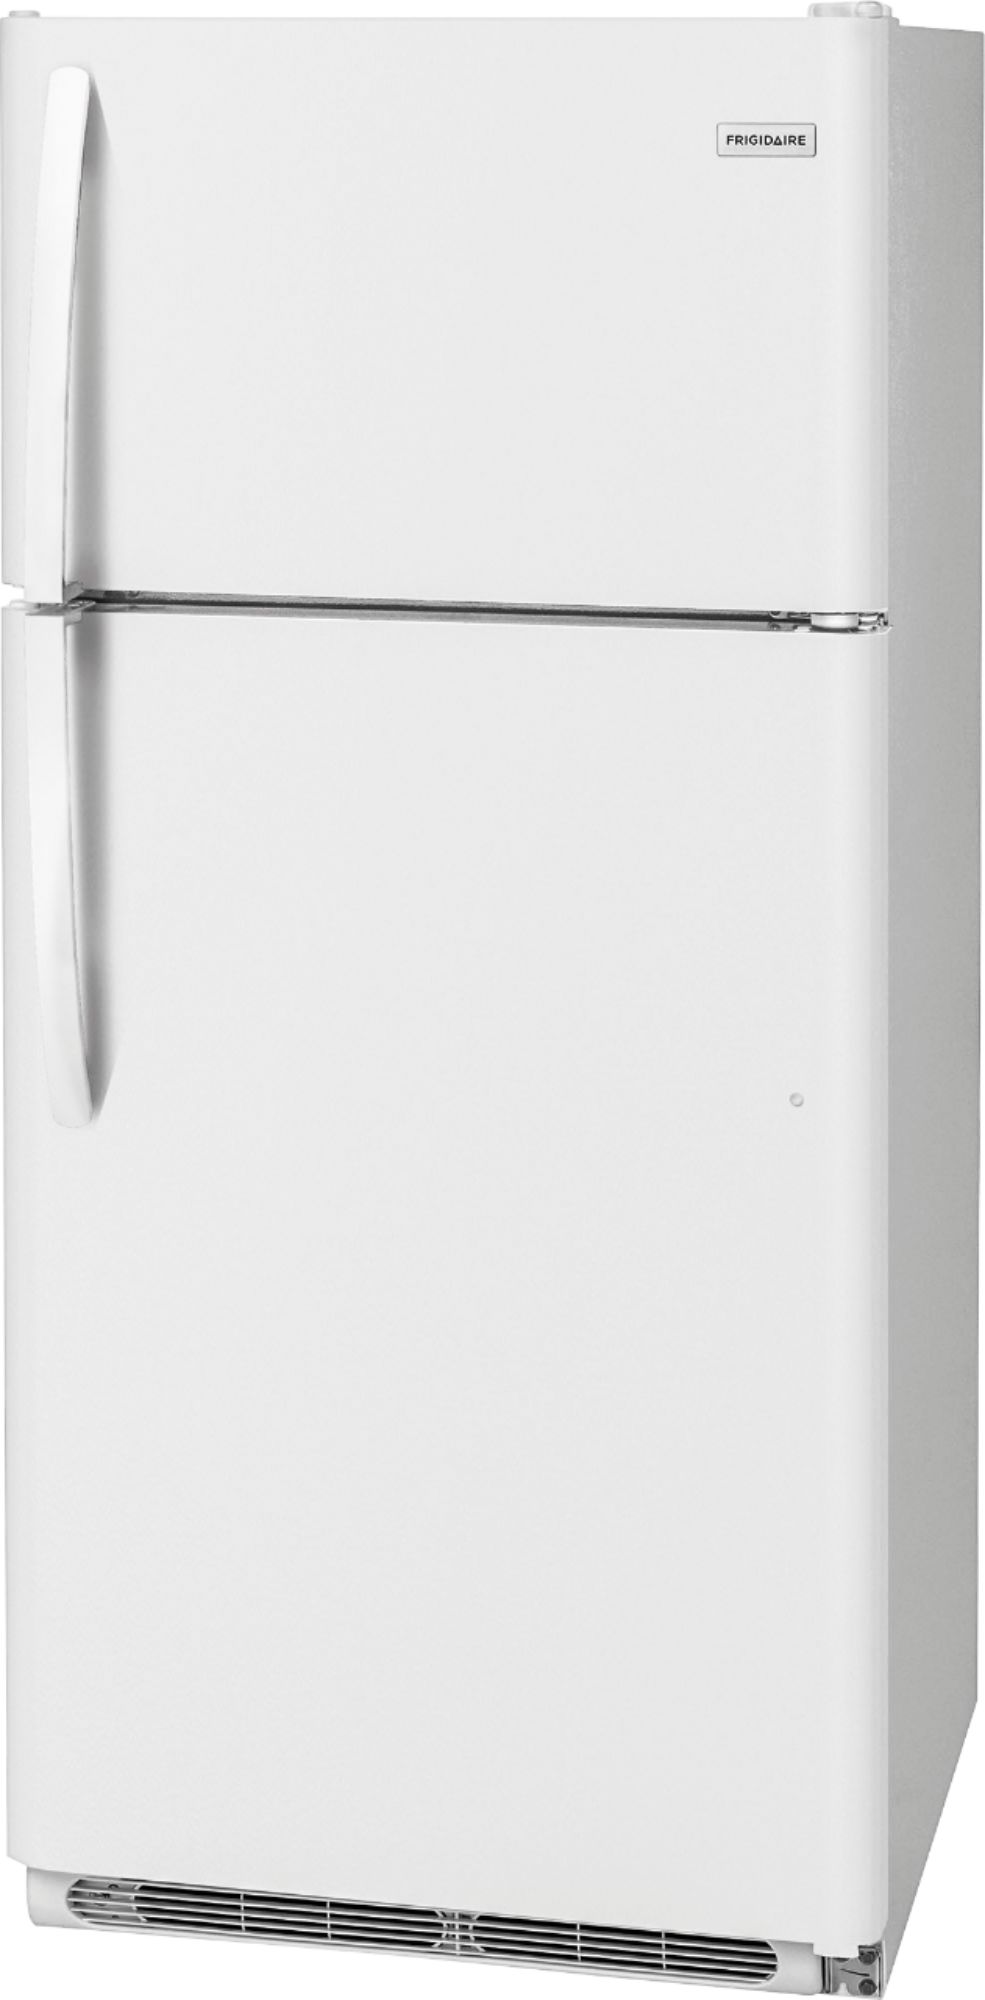 Frigidaire 18.1 Cu. Ft. Top-Freezer Refrigerator White FFTR1814TW - Best Buy